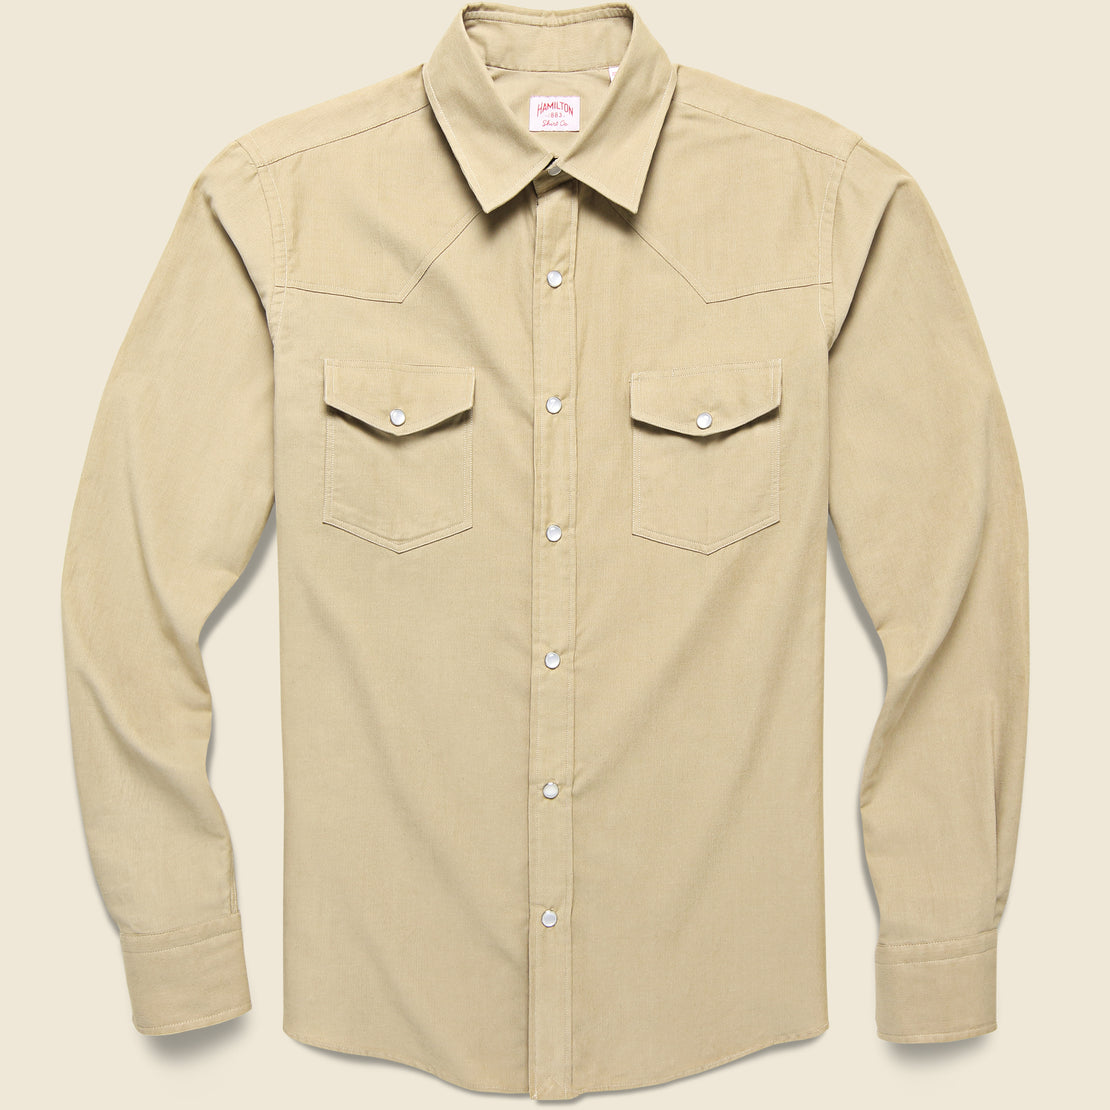 Hamilton Shirt Co. Micro Corduroy Western Shirt - Tan